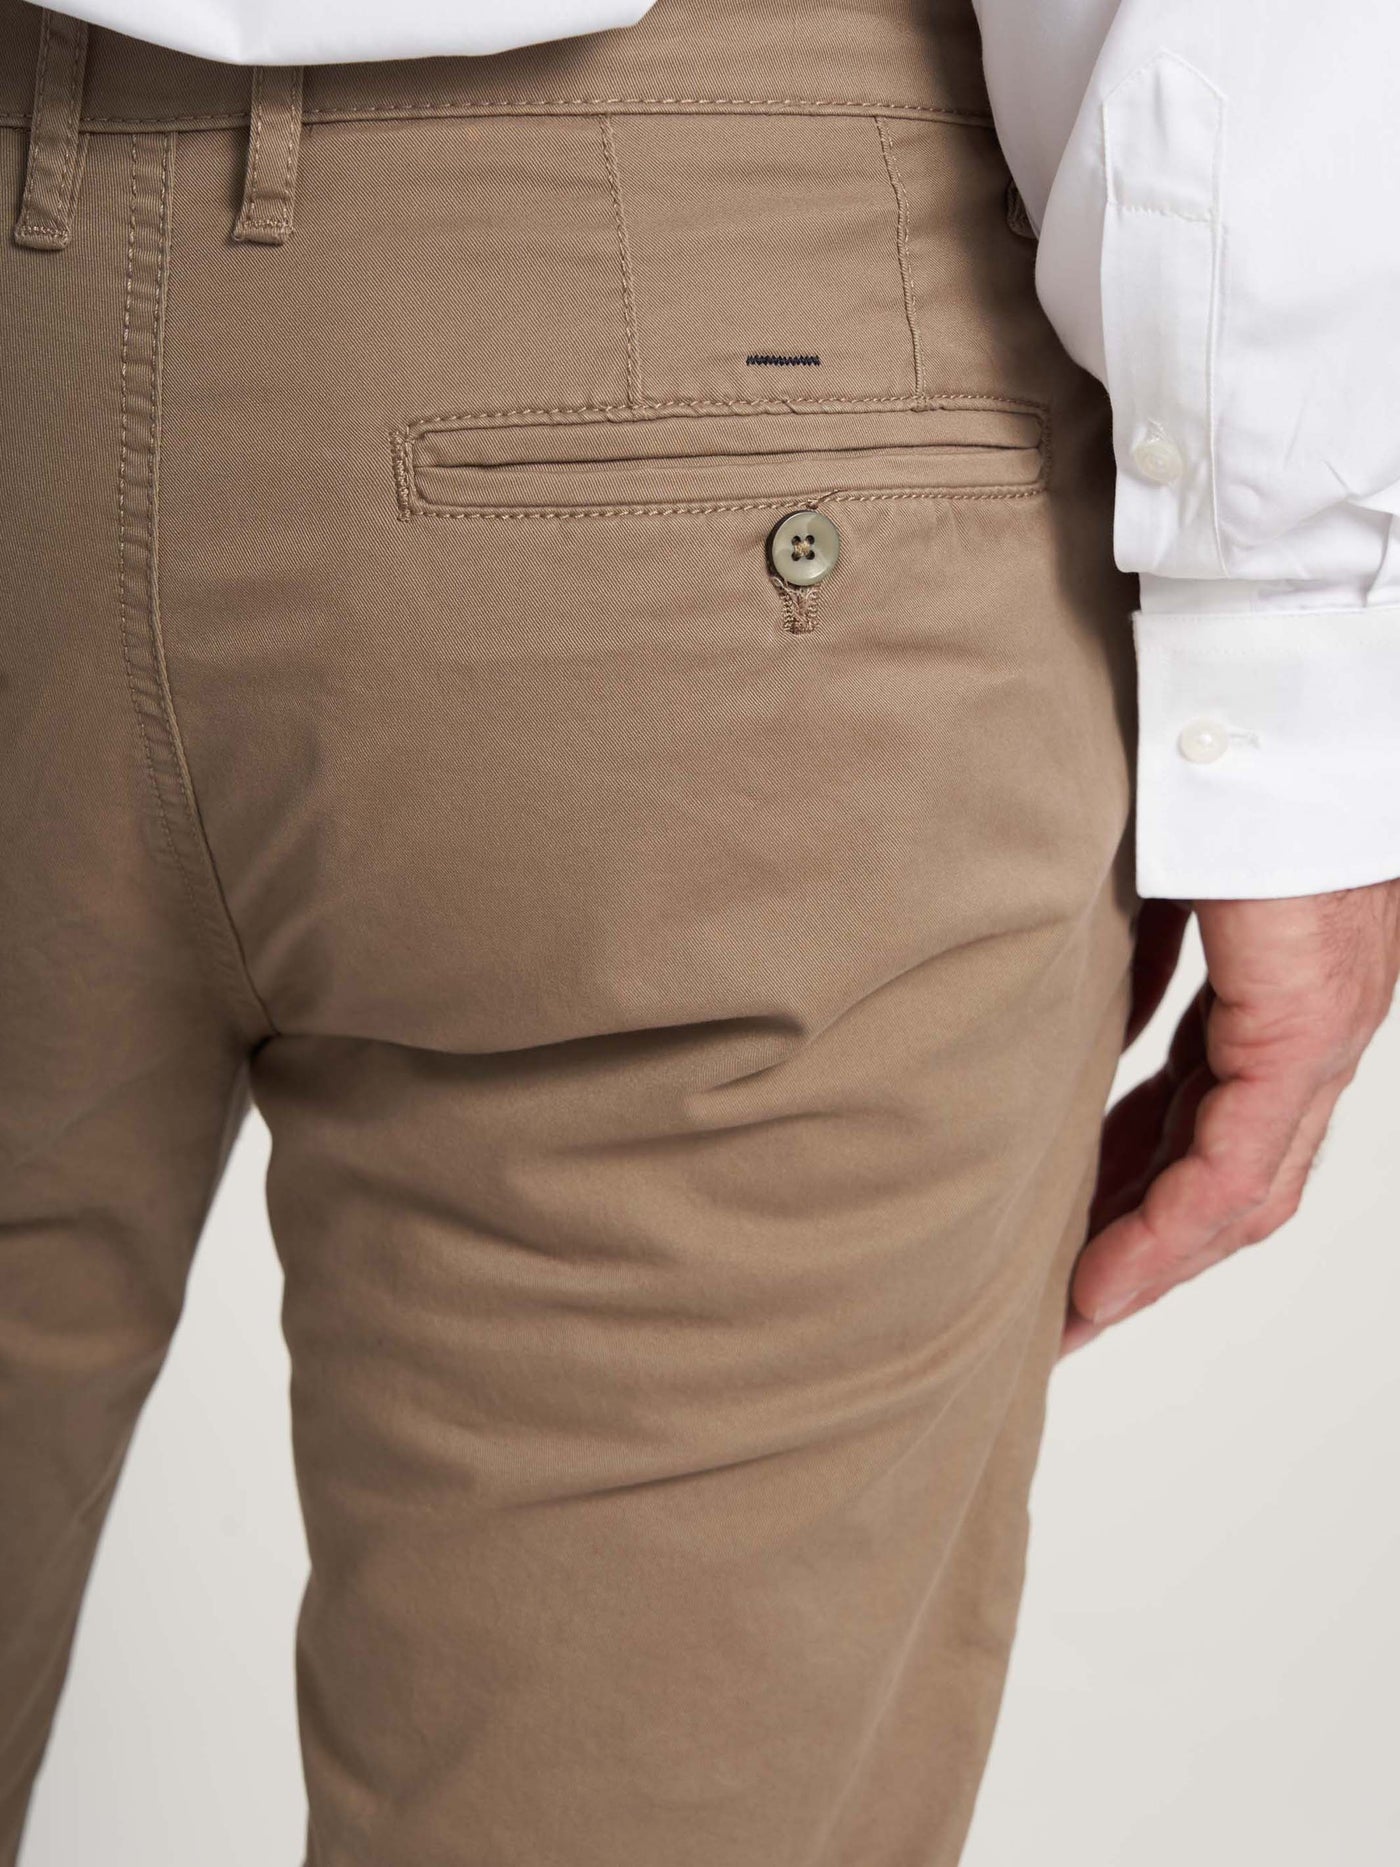 Chino bukser til mænd sand farvet